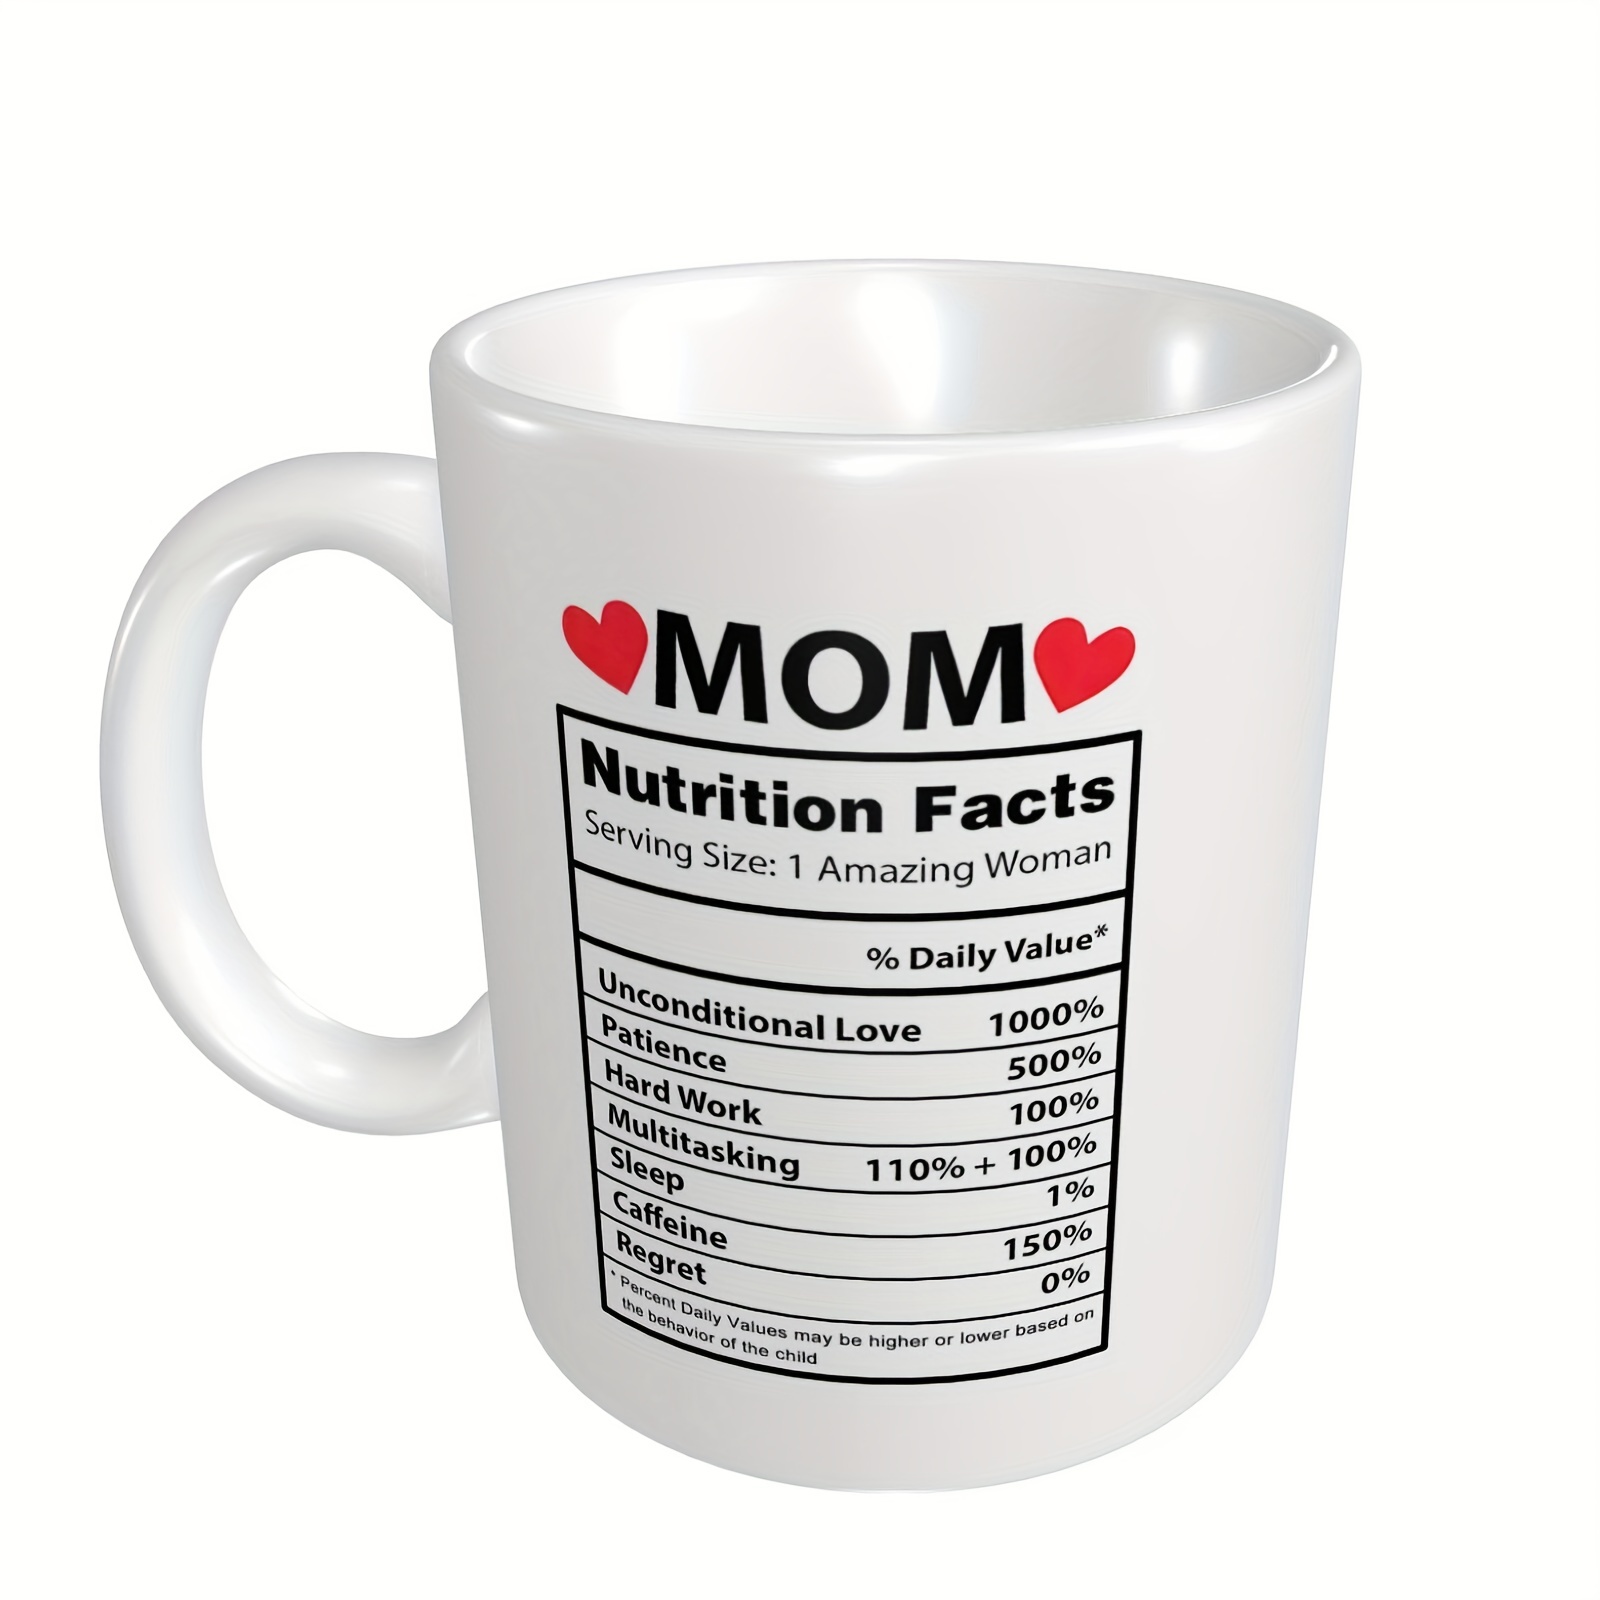 Mom Mug Birthday Gift From Daughter - Stocking Stuffer Ideas For